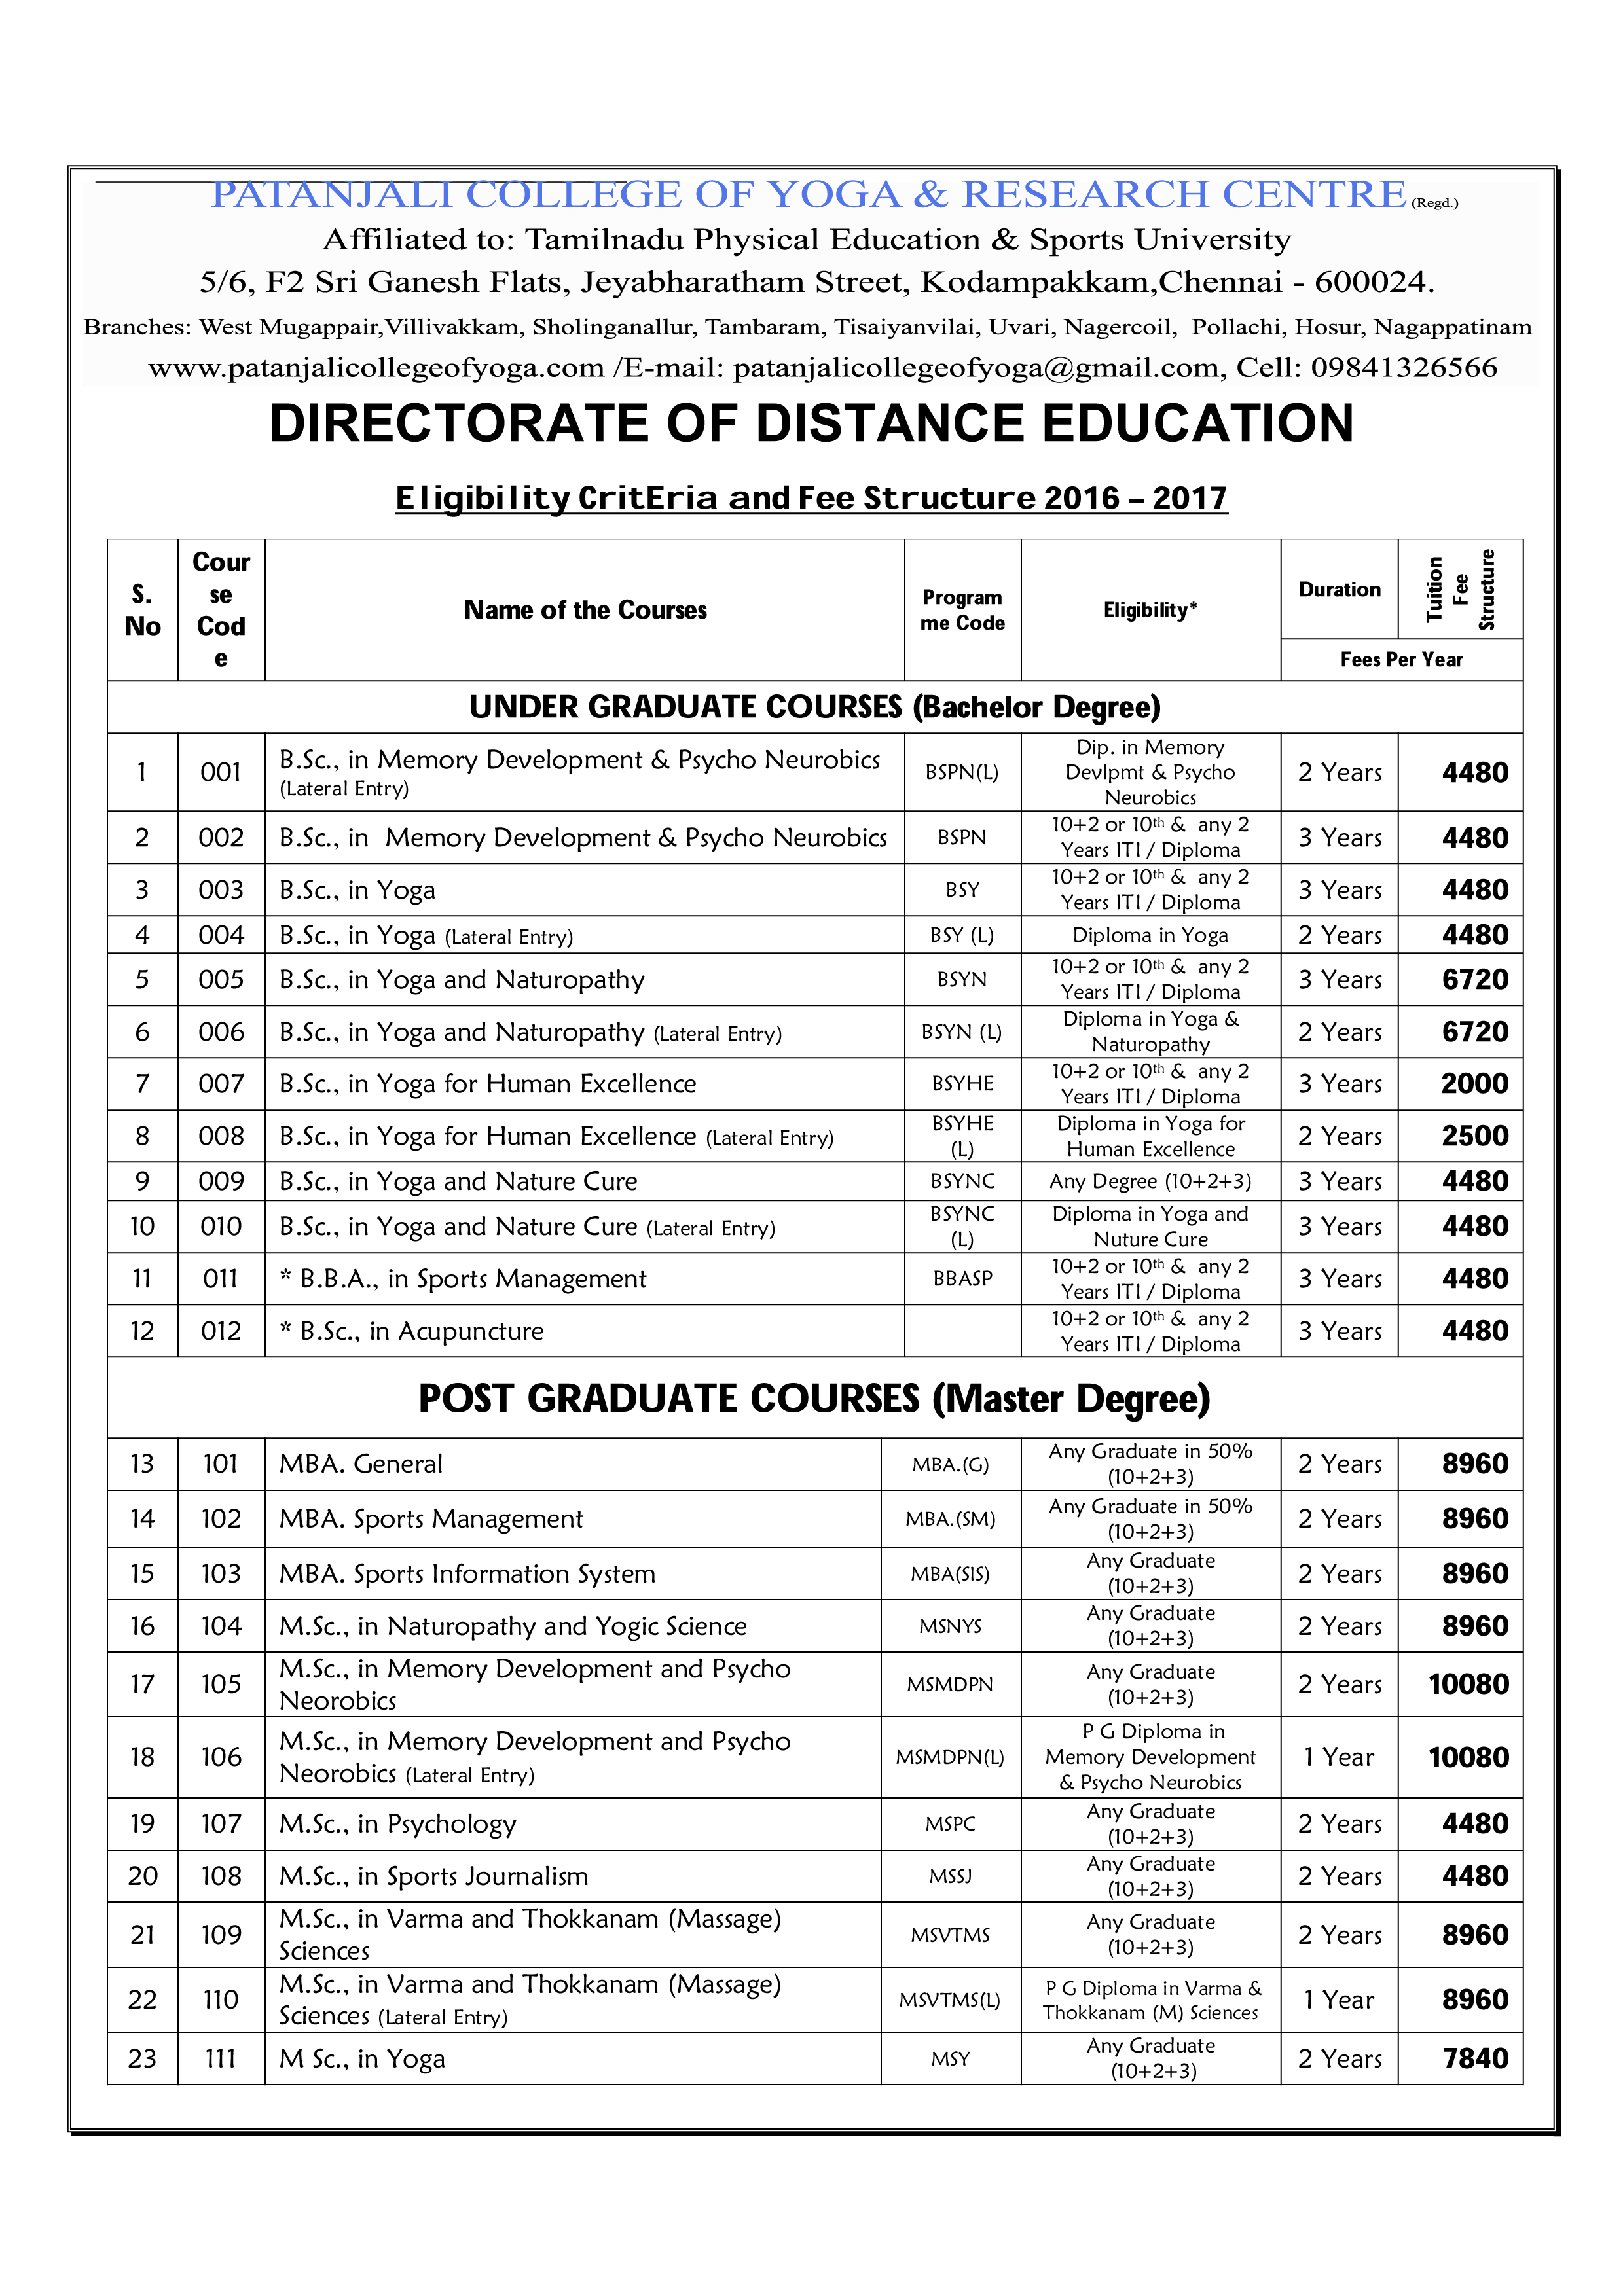 TNPSU DDE List of Courses 2016-171